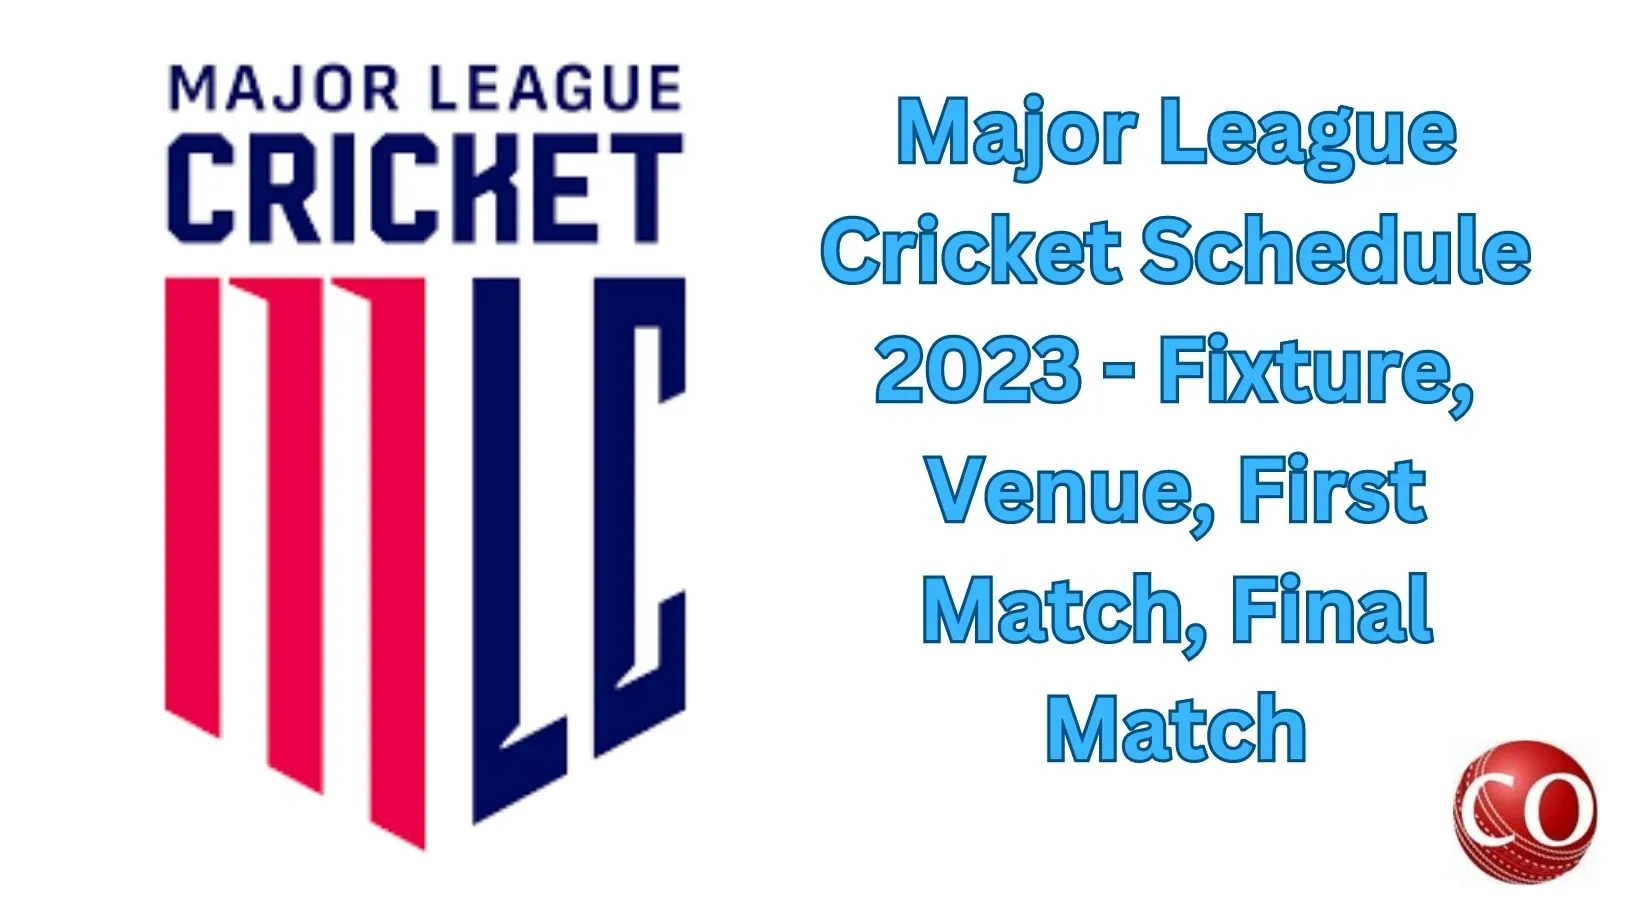 Major League Cricket Schedule 2023